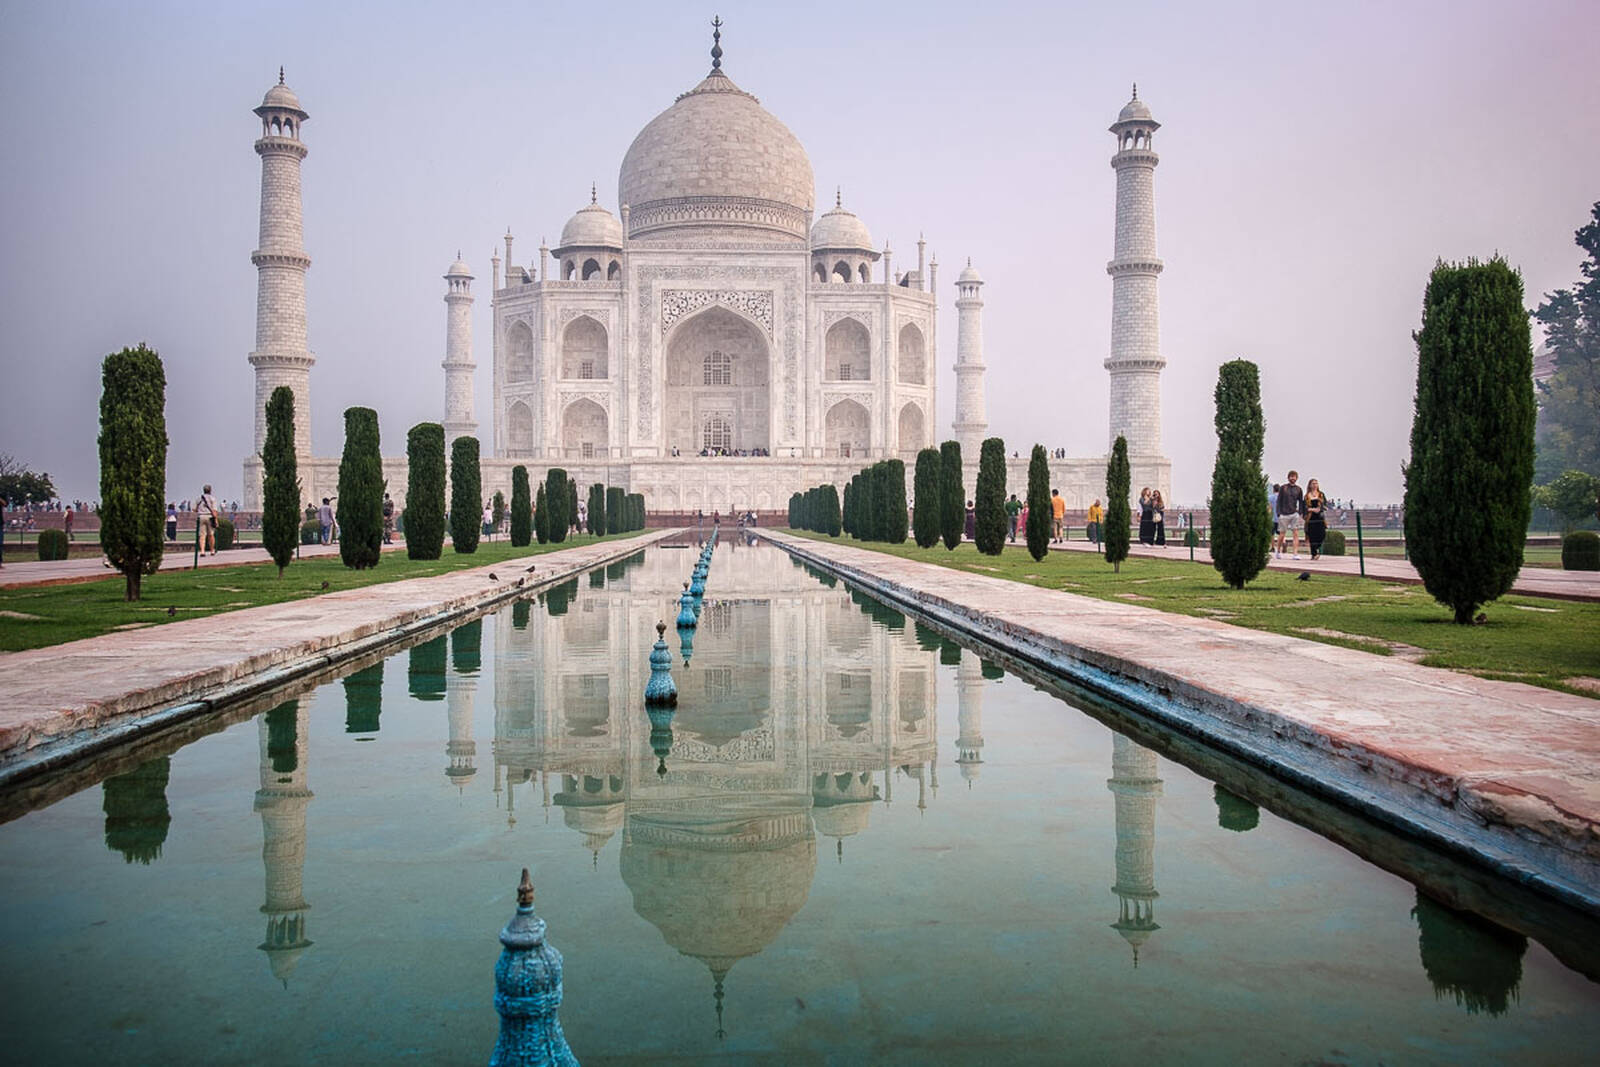 Image of Taj Mahal - Classic View by Darlene Hildebrandt